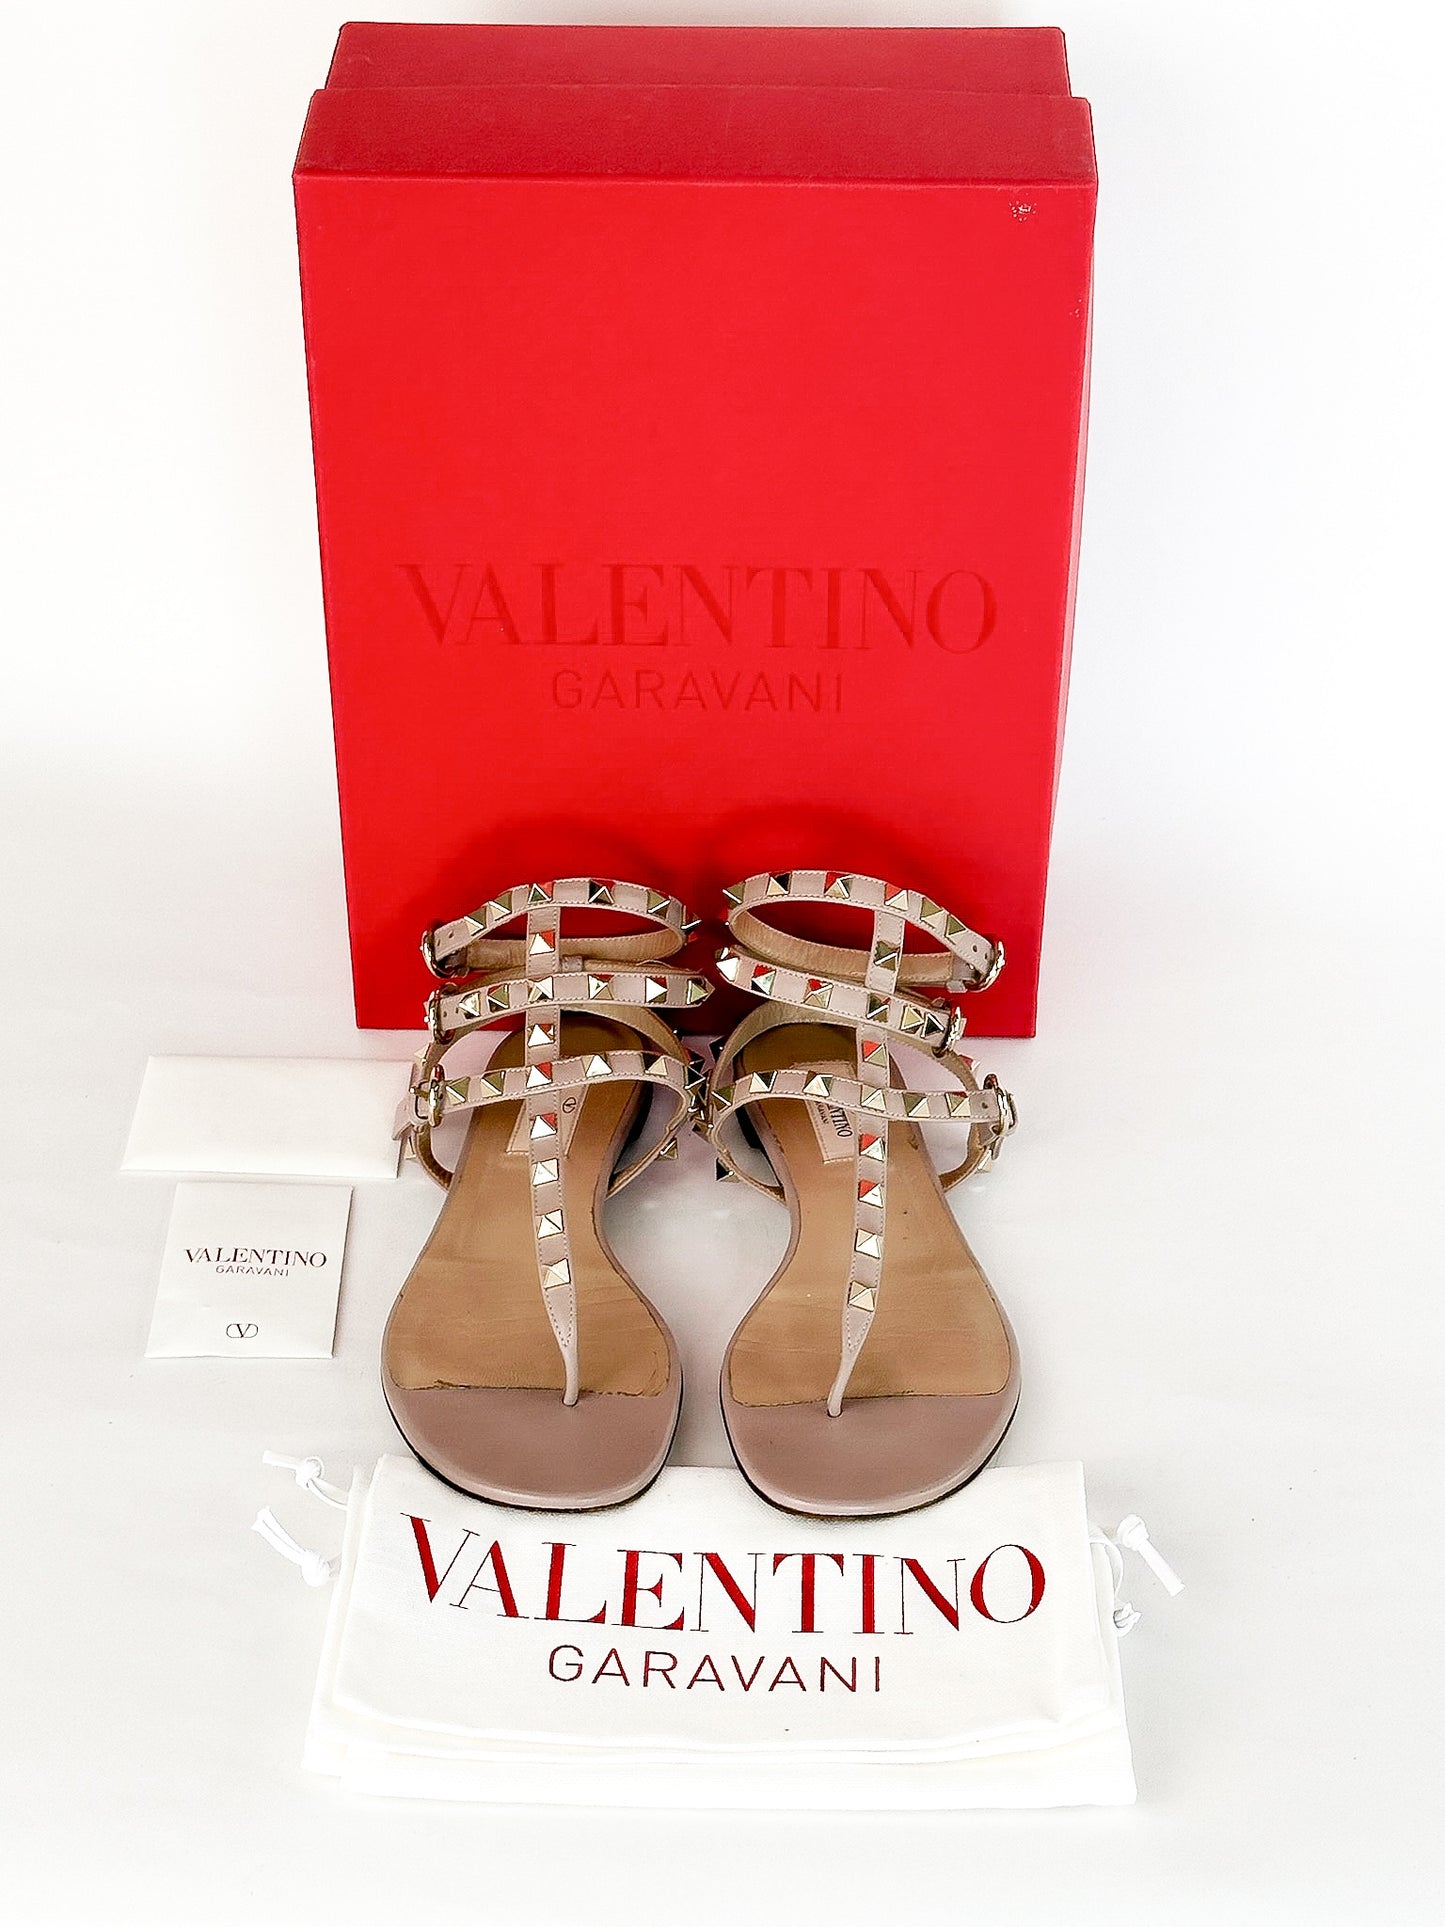 Valentino Garavani Rockstud Flip Flop Sandal In Calfskin Leather Size 36